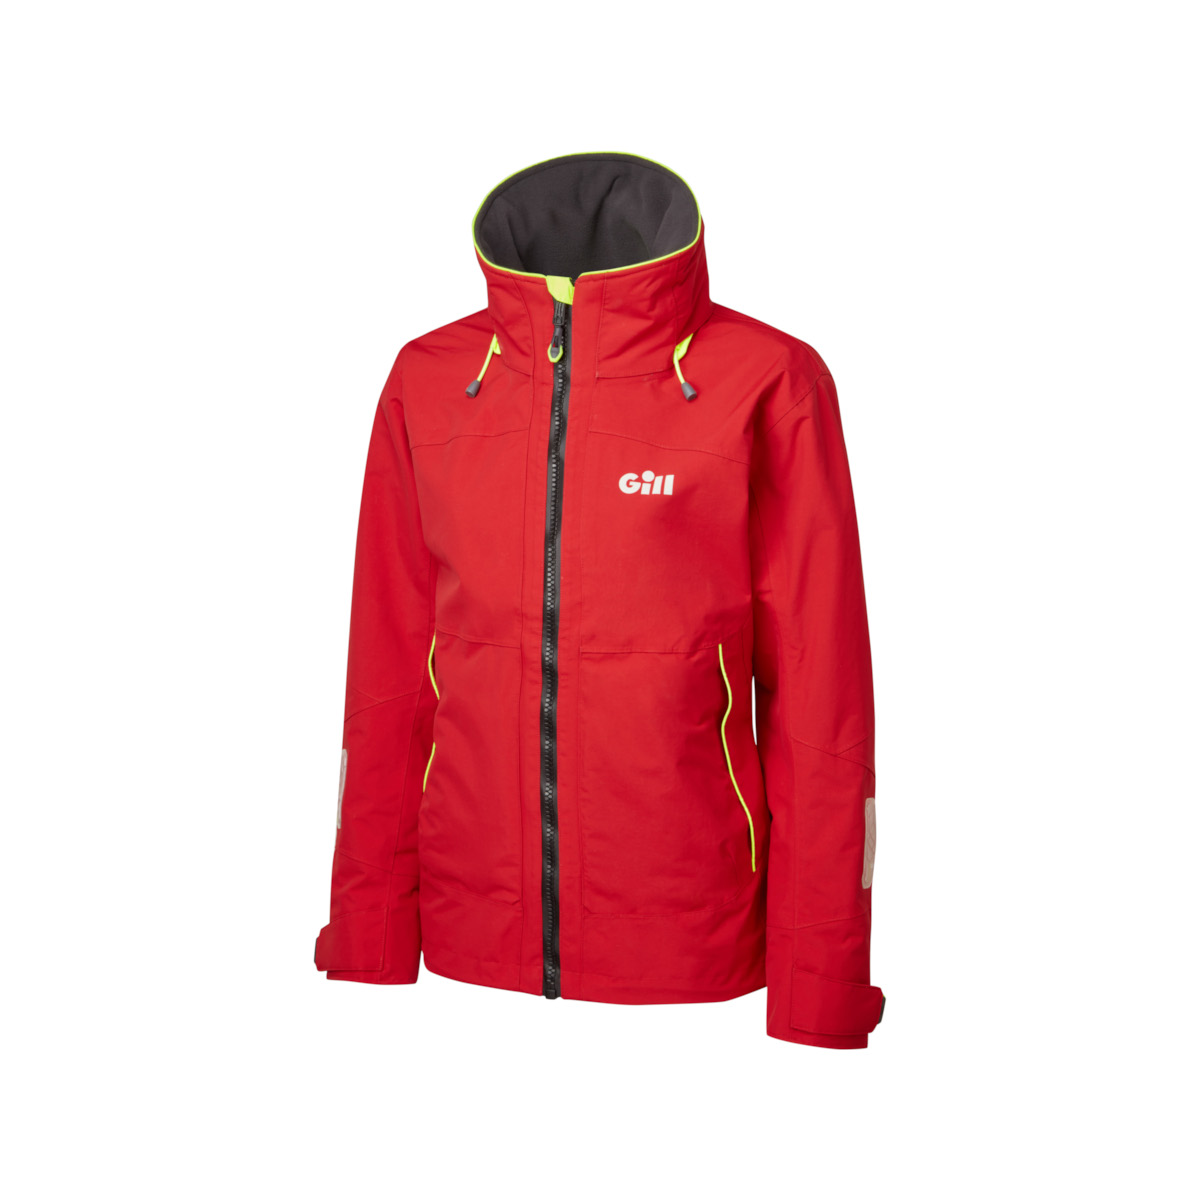 Gill OS32 veste de voile Coastal femme rouge, taille 8